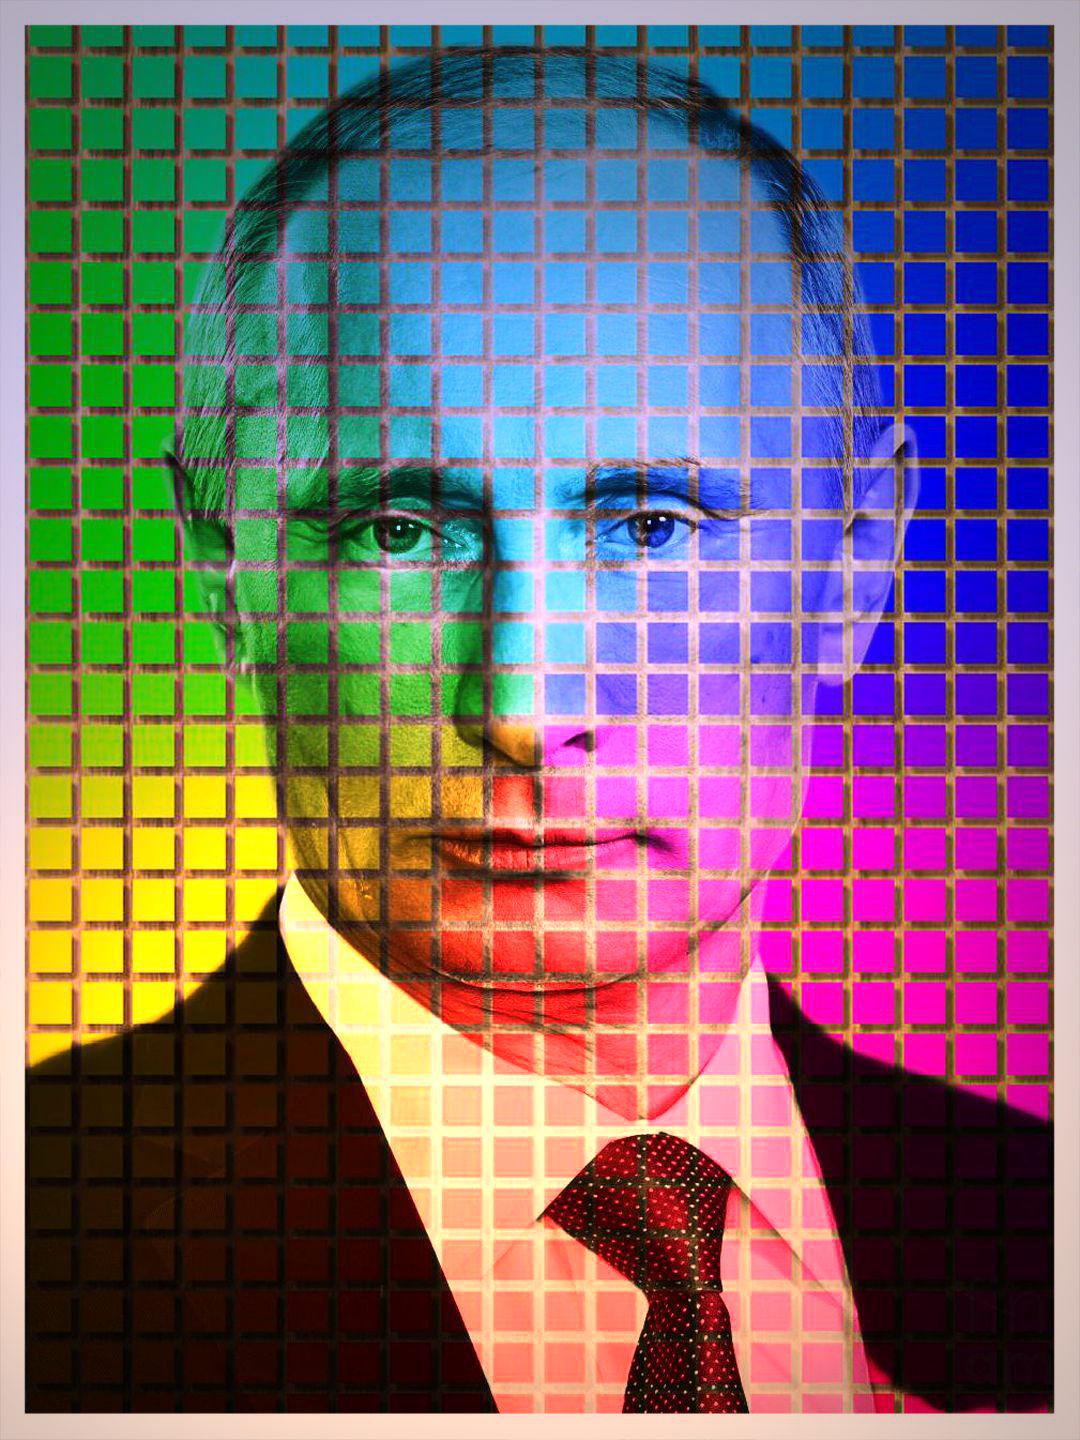 Anjelica Lesbian Threesome - Vladimir Vladimirovich Putin - Celeb ART - Beautiful Artworks of  Celebrities, Footballers, Politicians and Famous People in World | OpenSea